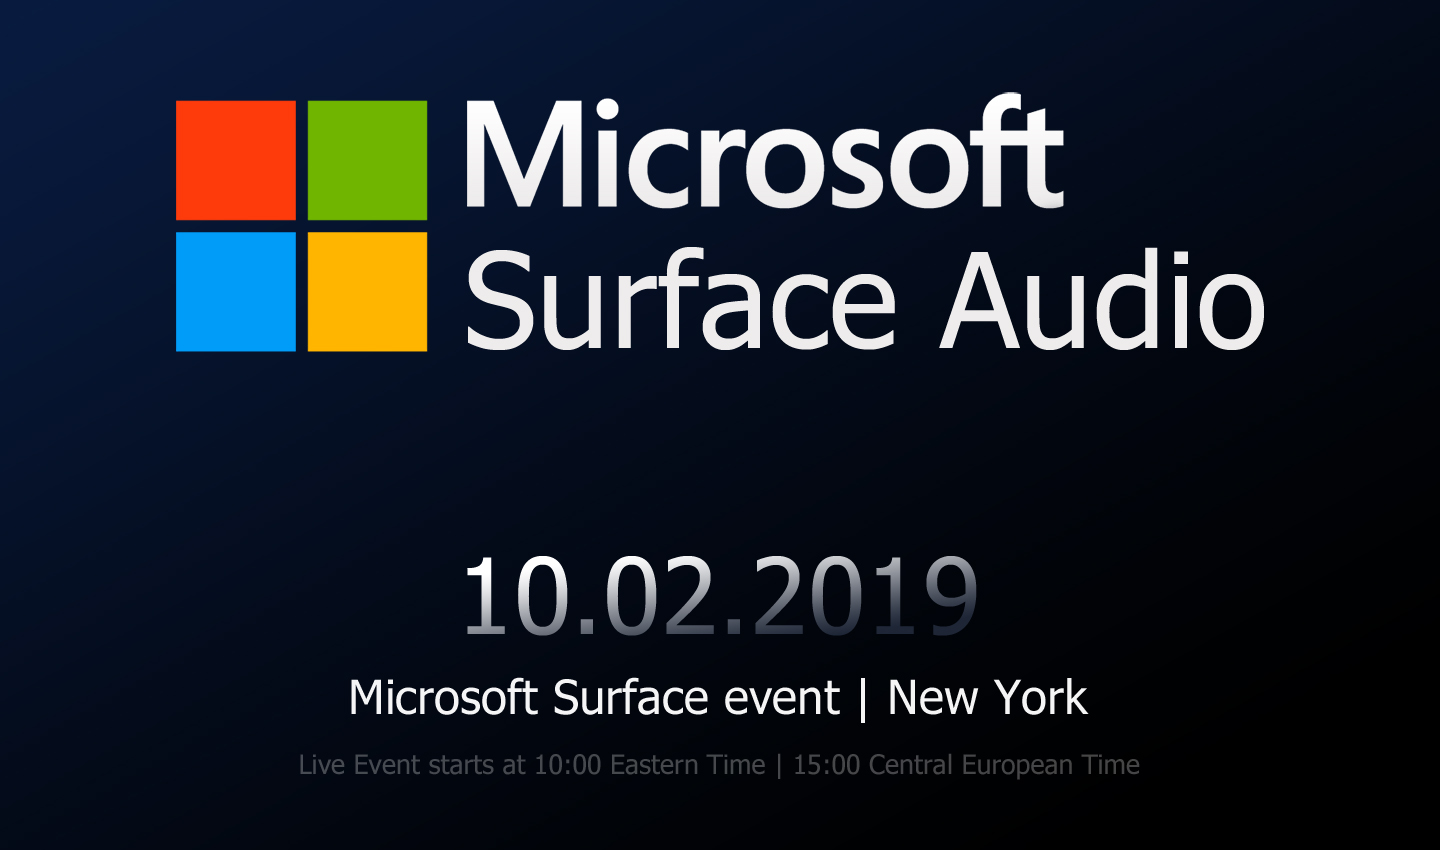 Microsoft Surface 2019 event